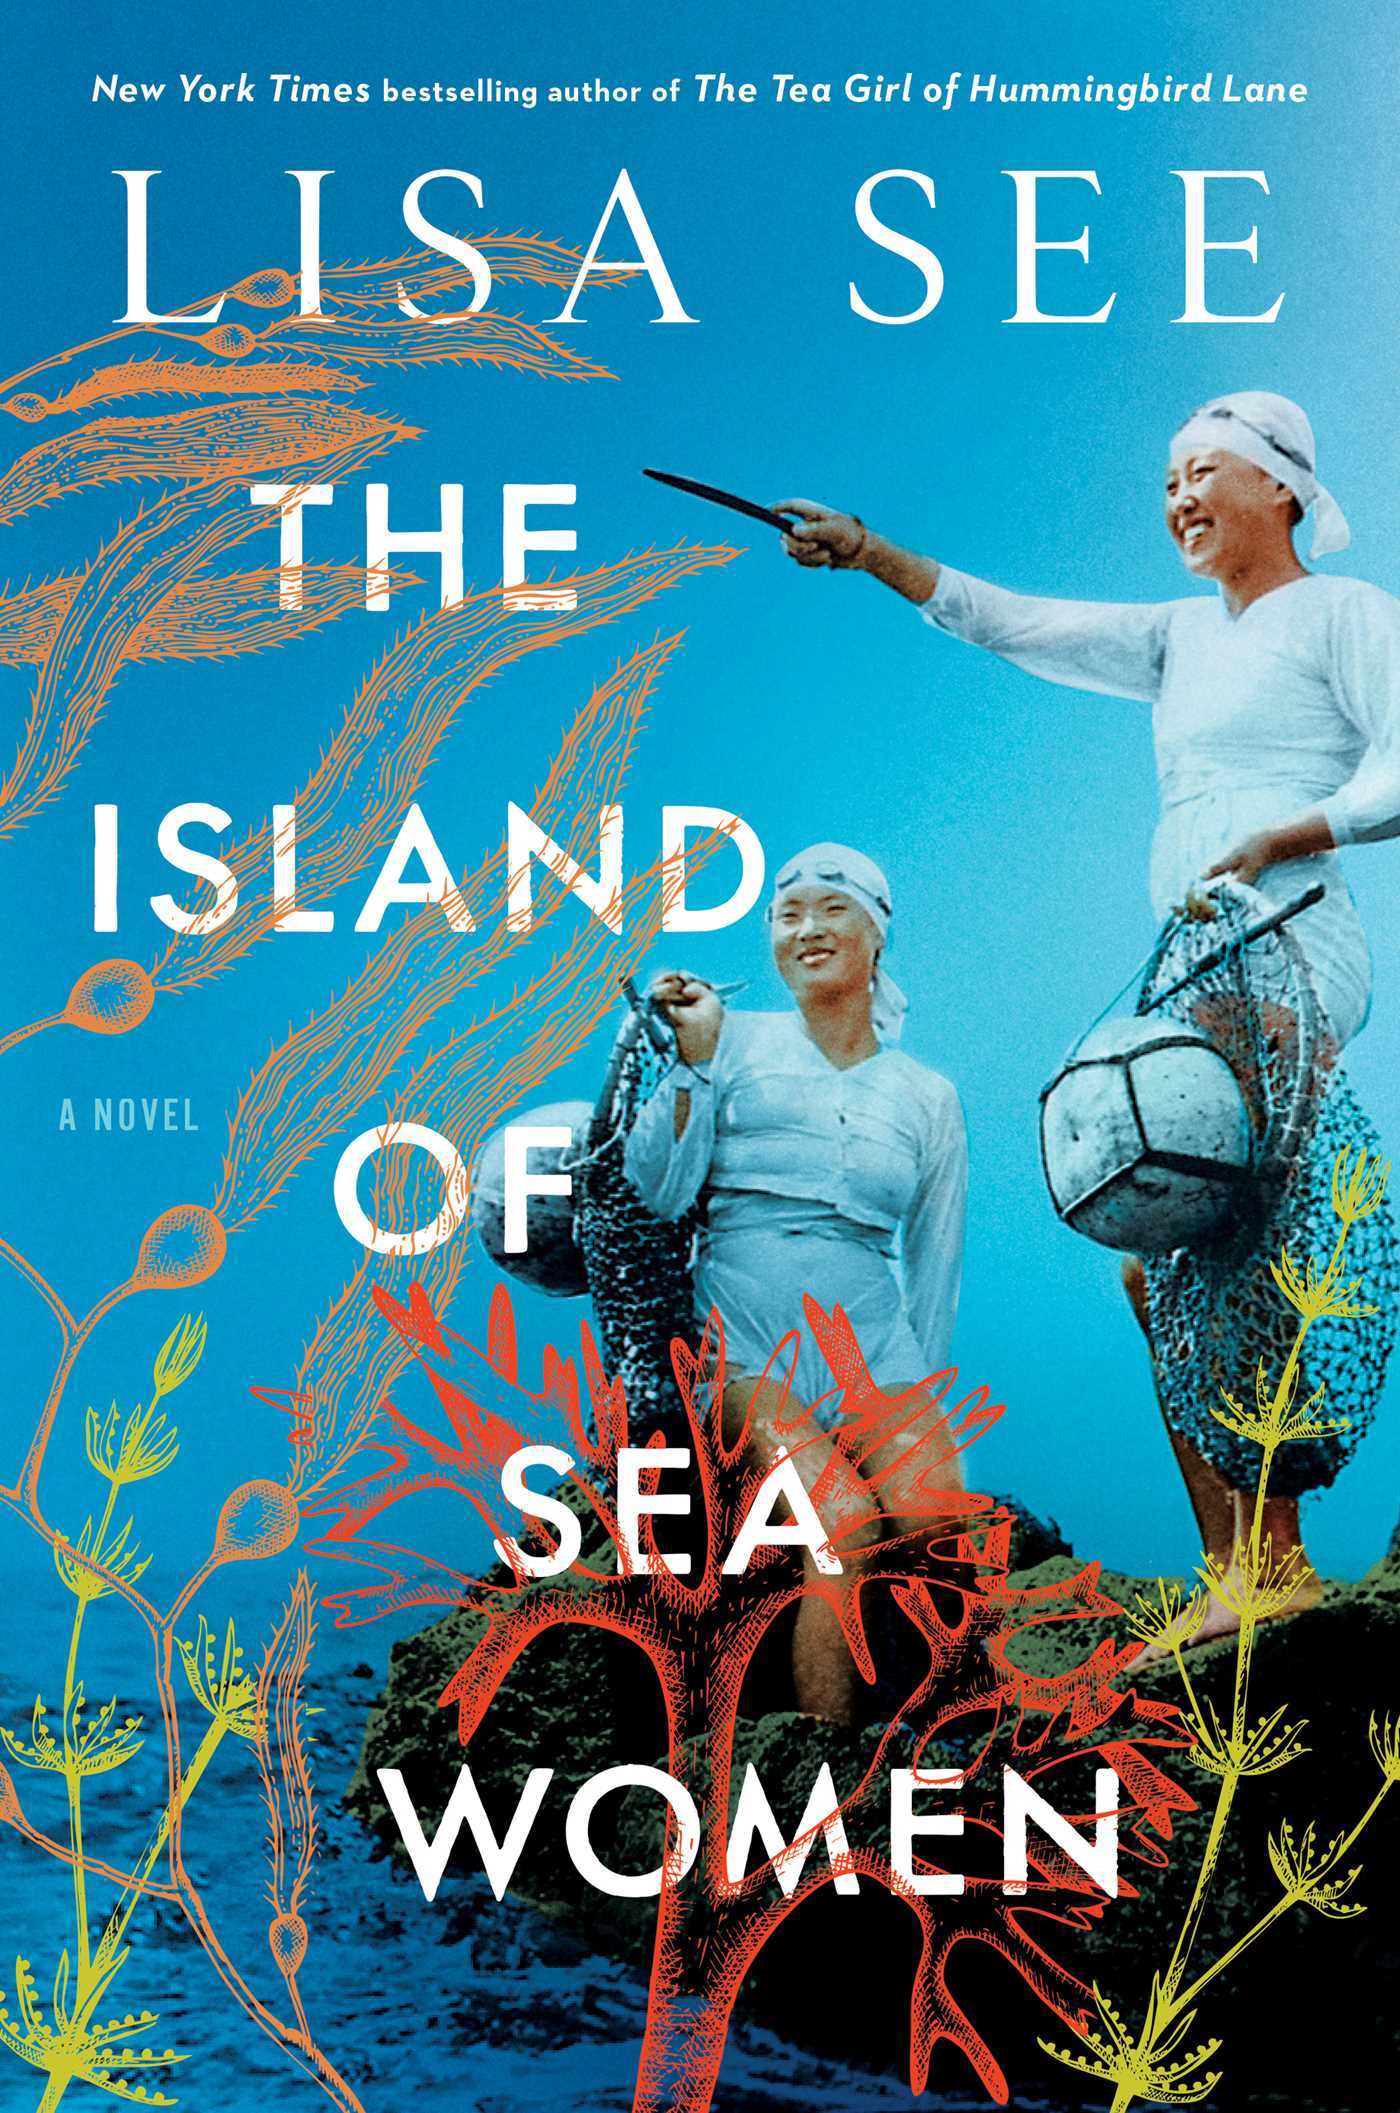 The Island of Sea Women - Lisa See